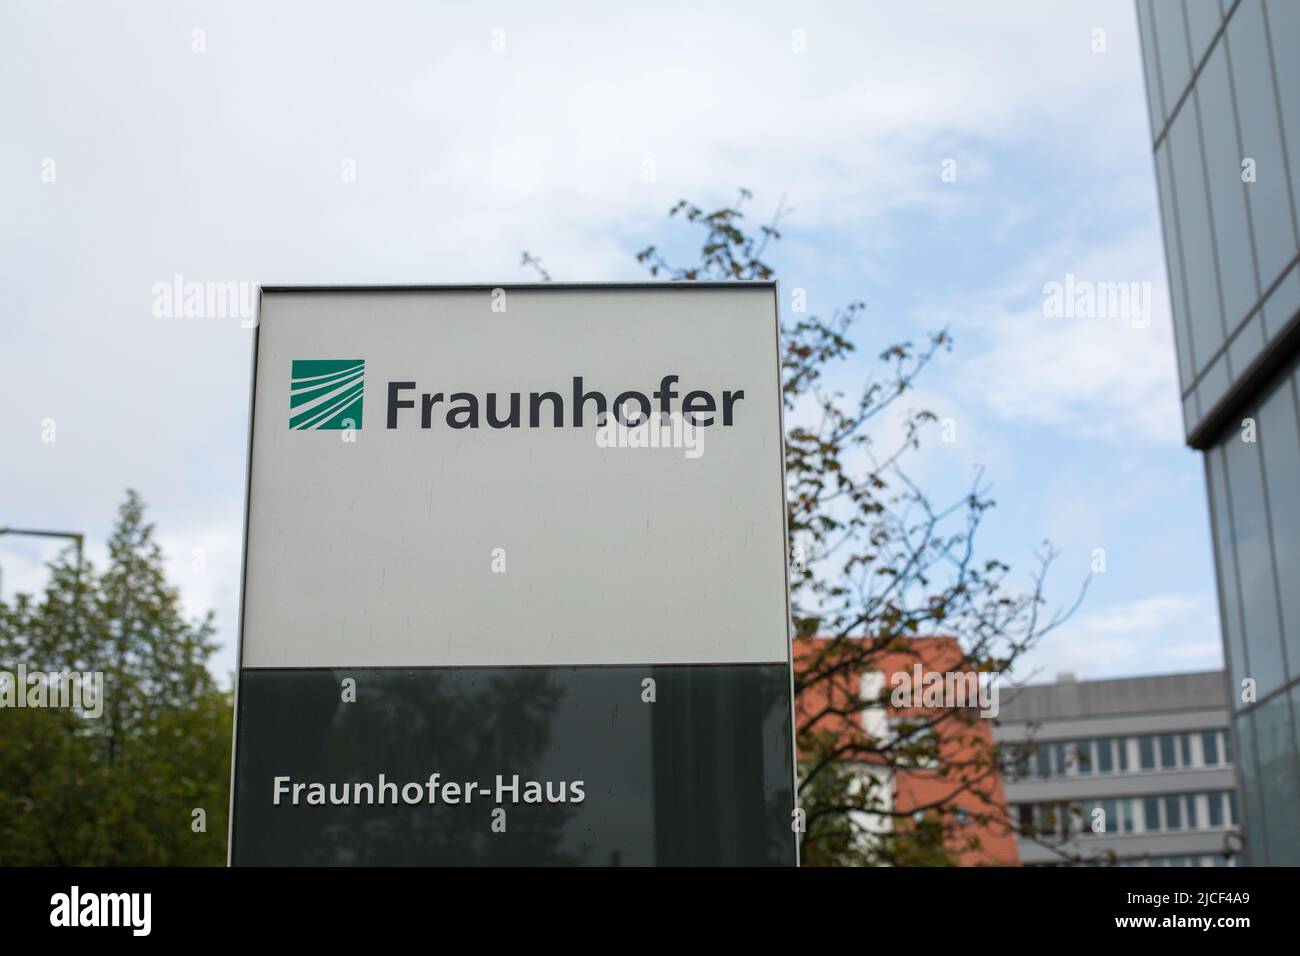 Munich, Alemania - 16 de septiembre de 2021: Firma con escritura 'Fraunhofer' y 'Fraunhofer-Haus'. Foto de stock